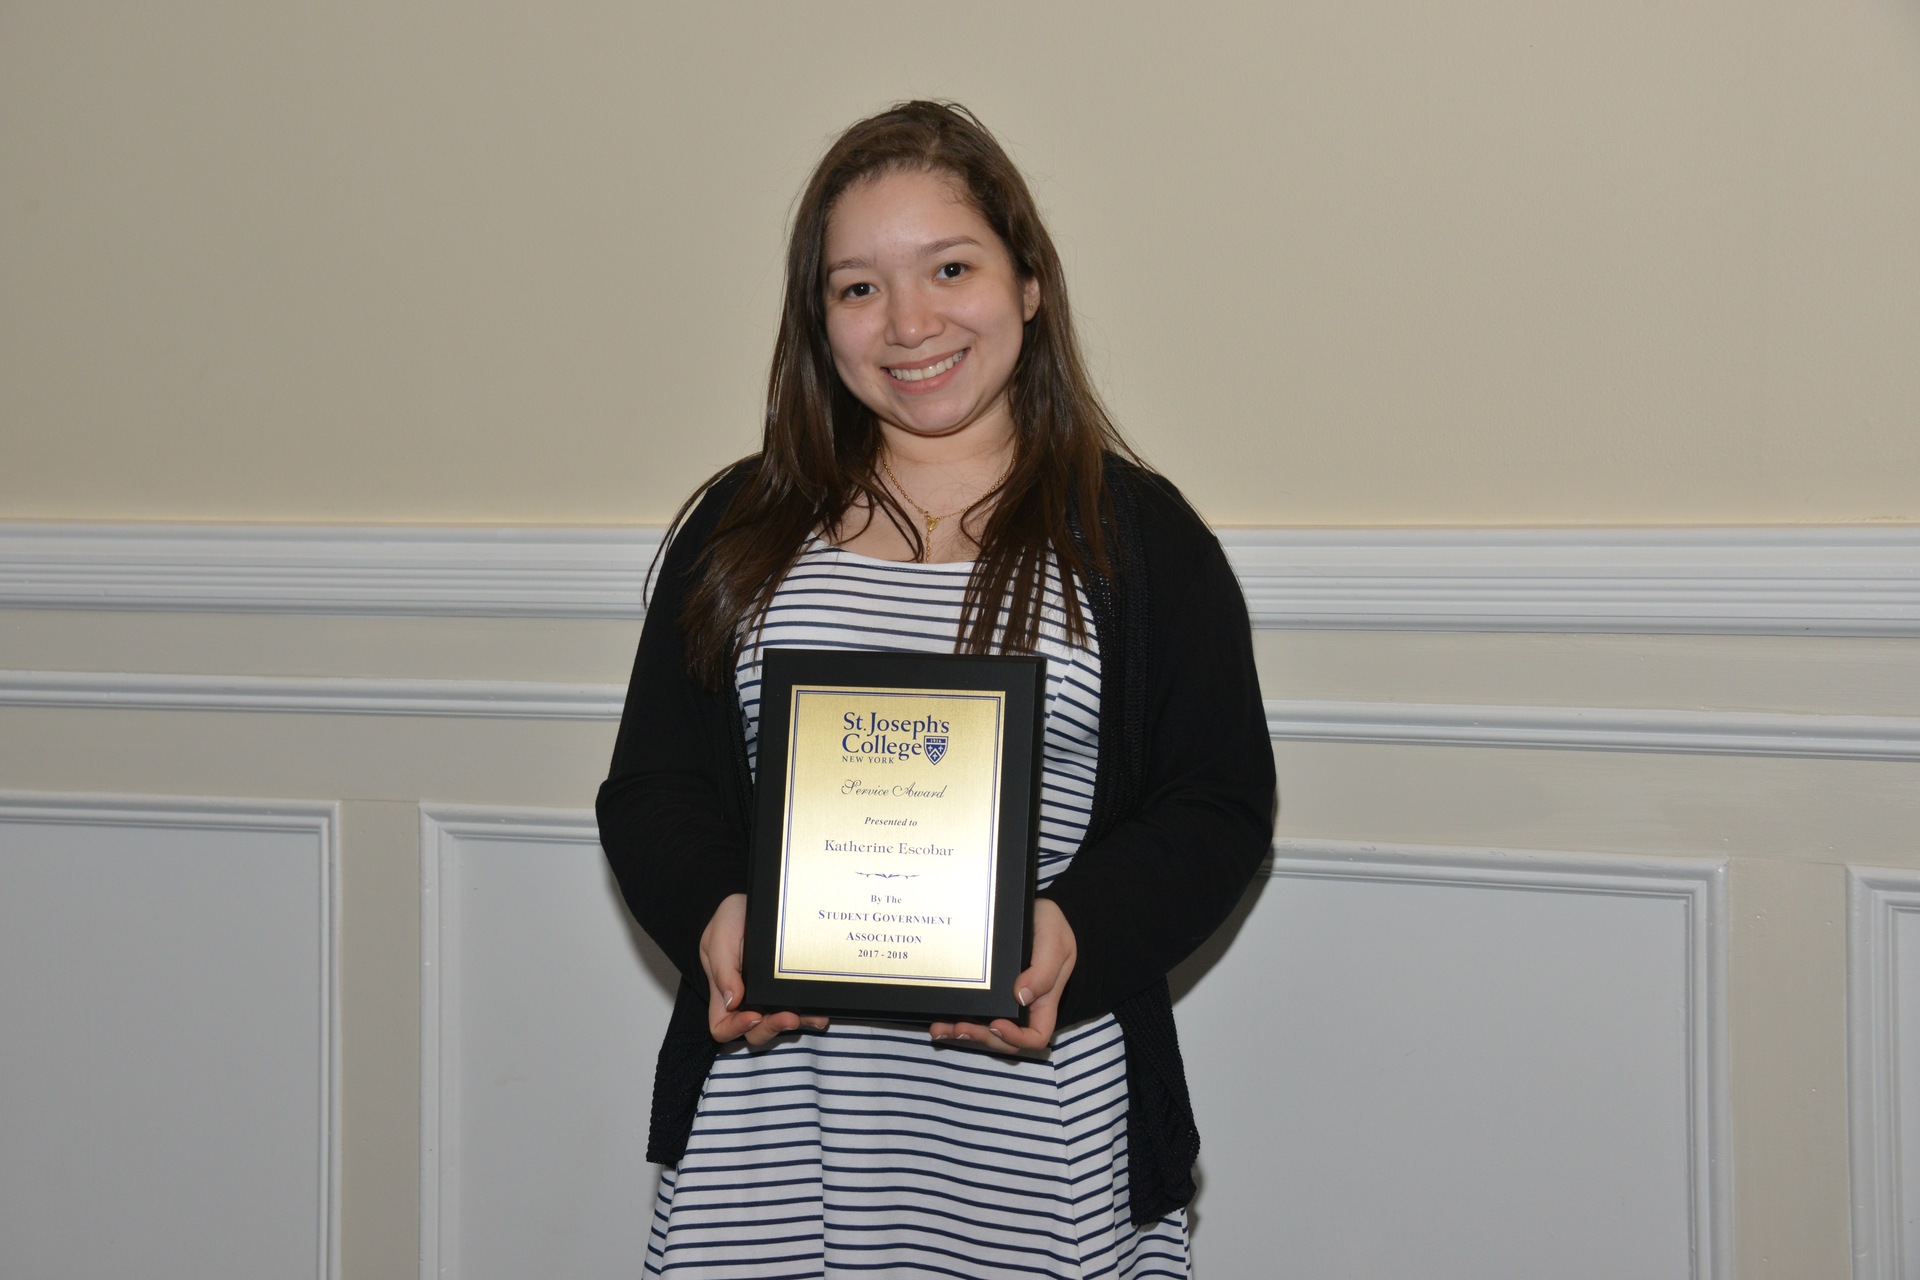 Katherine Escobar recognized for accomplishments.